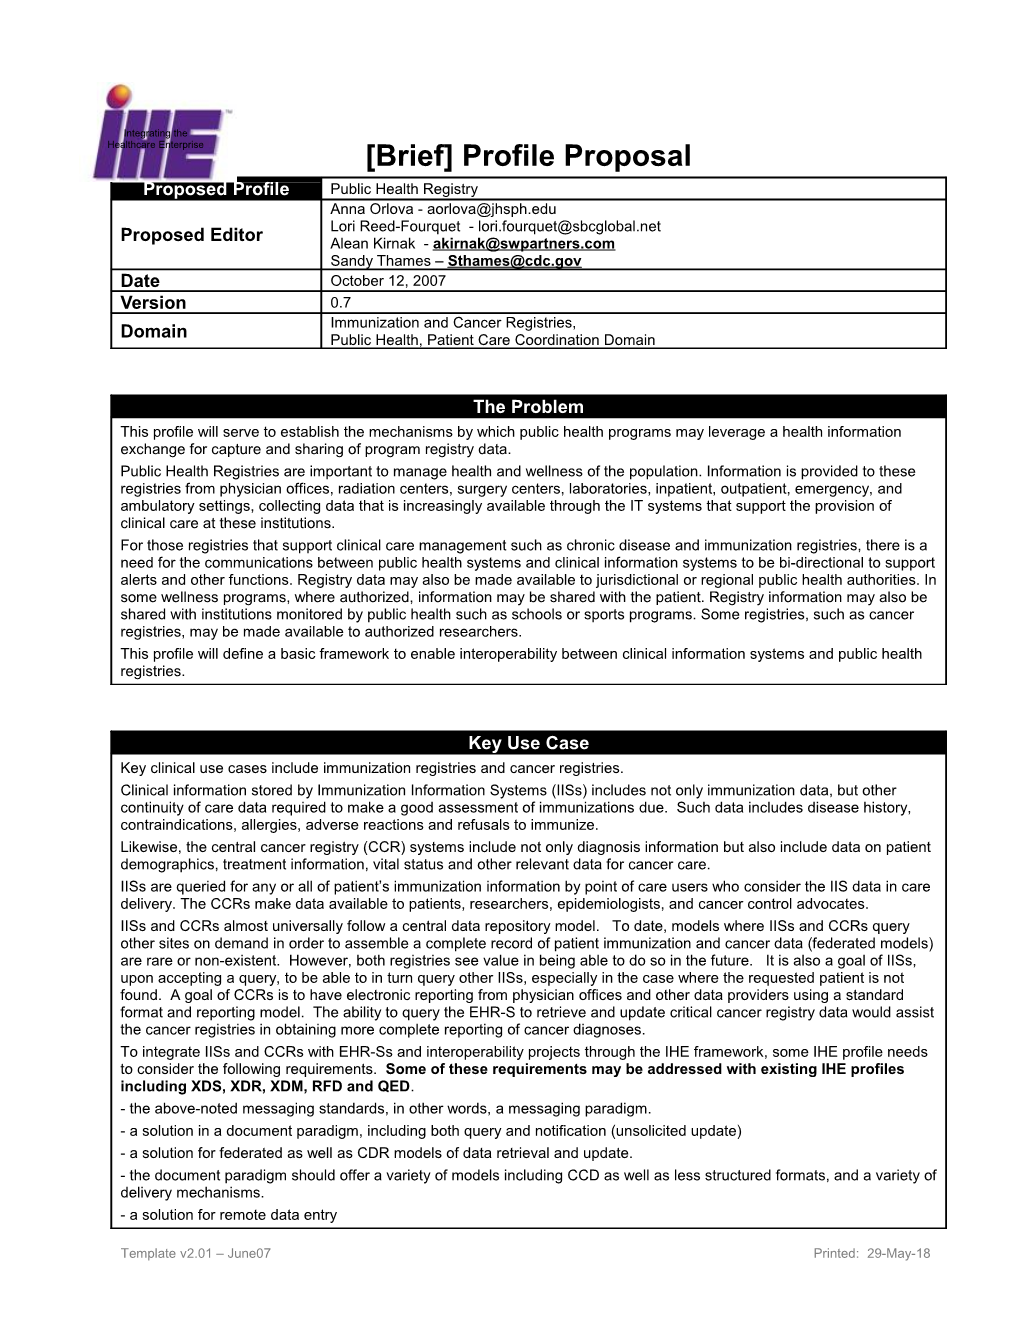 Brief Profile Proposal Page 2